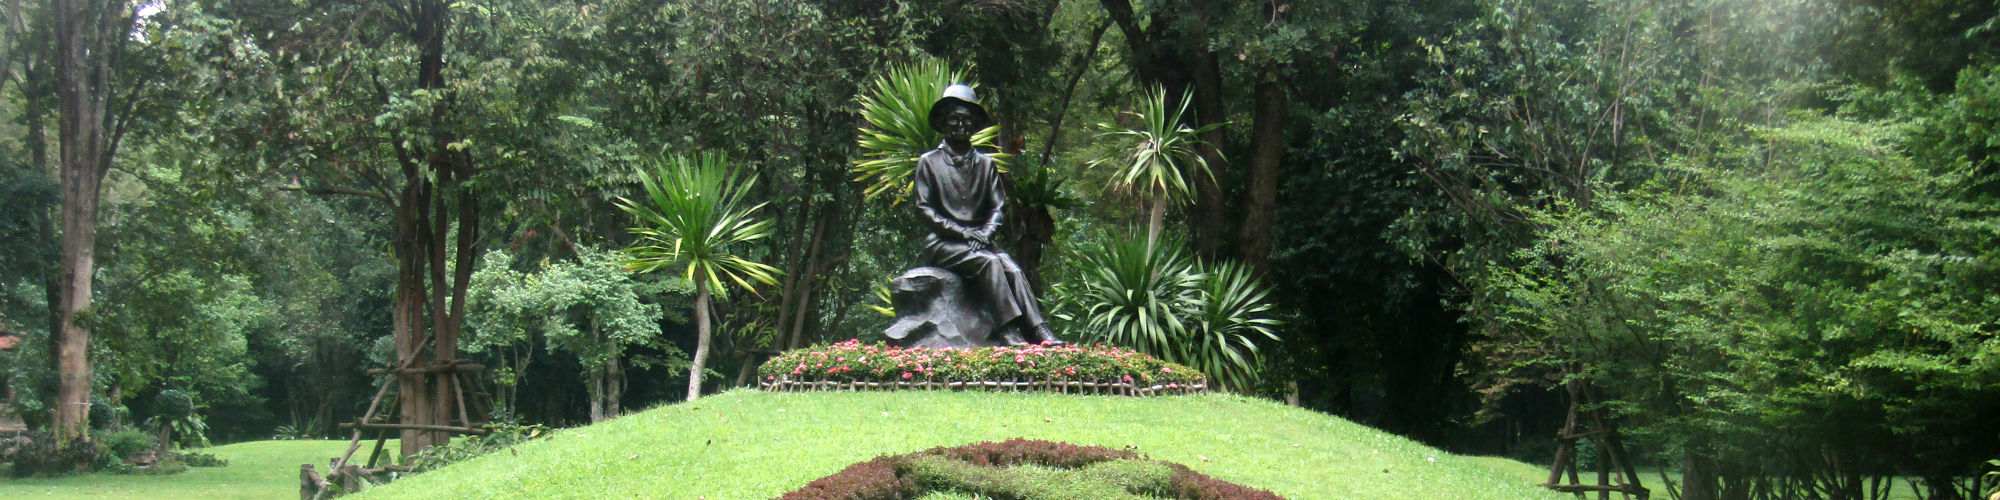 Park of the Duan Princess Mother Sisaket, Si Sa Ket